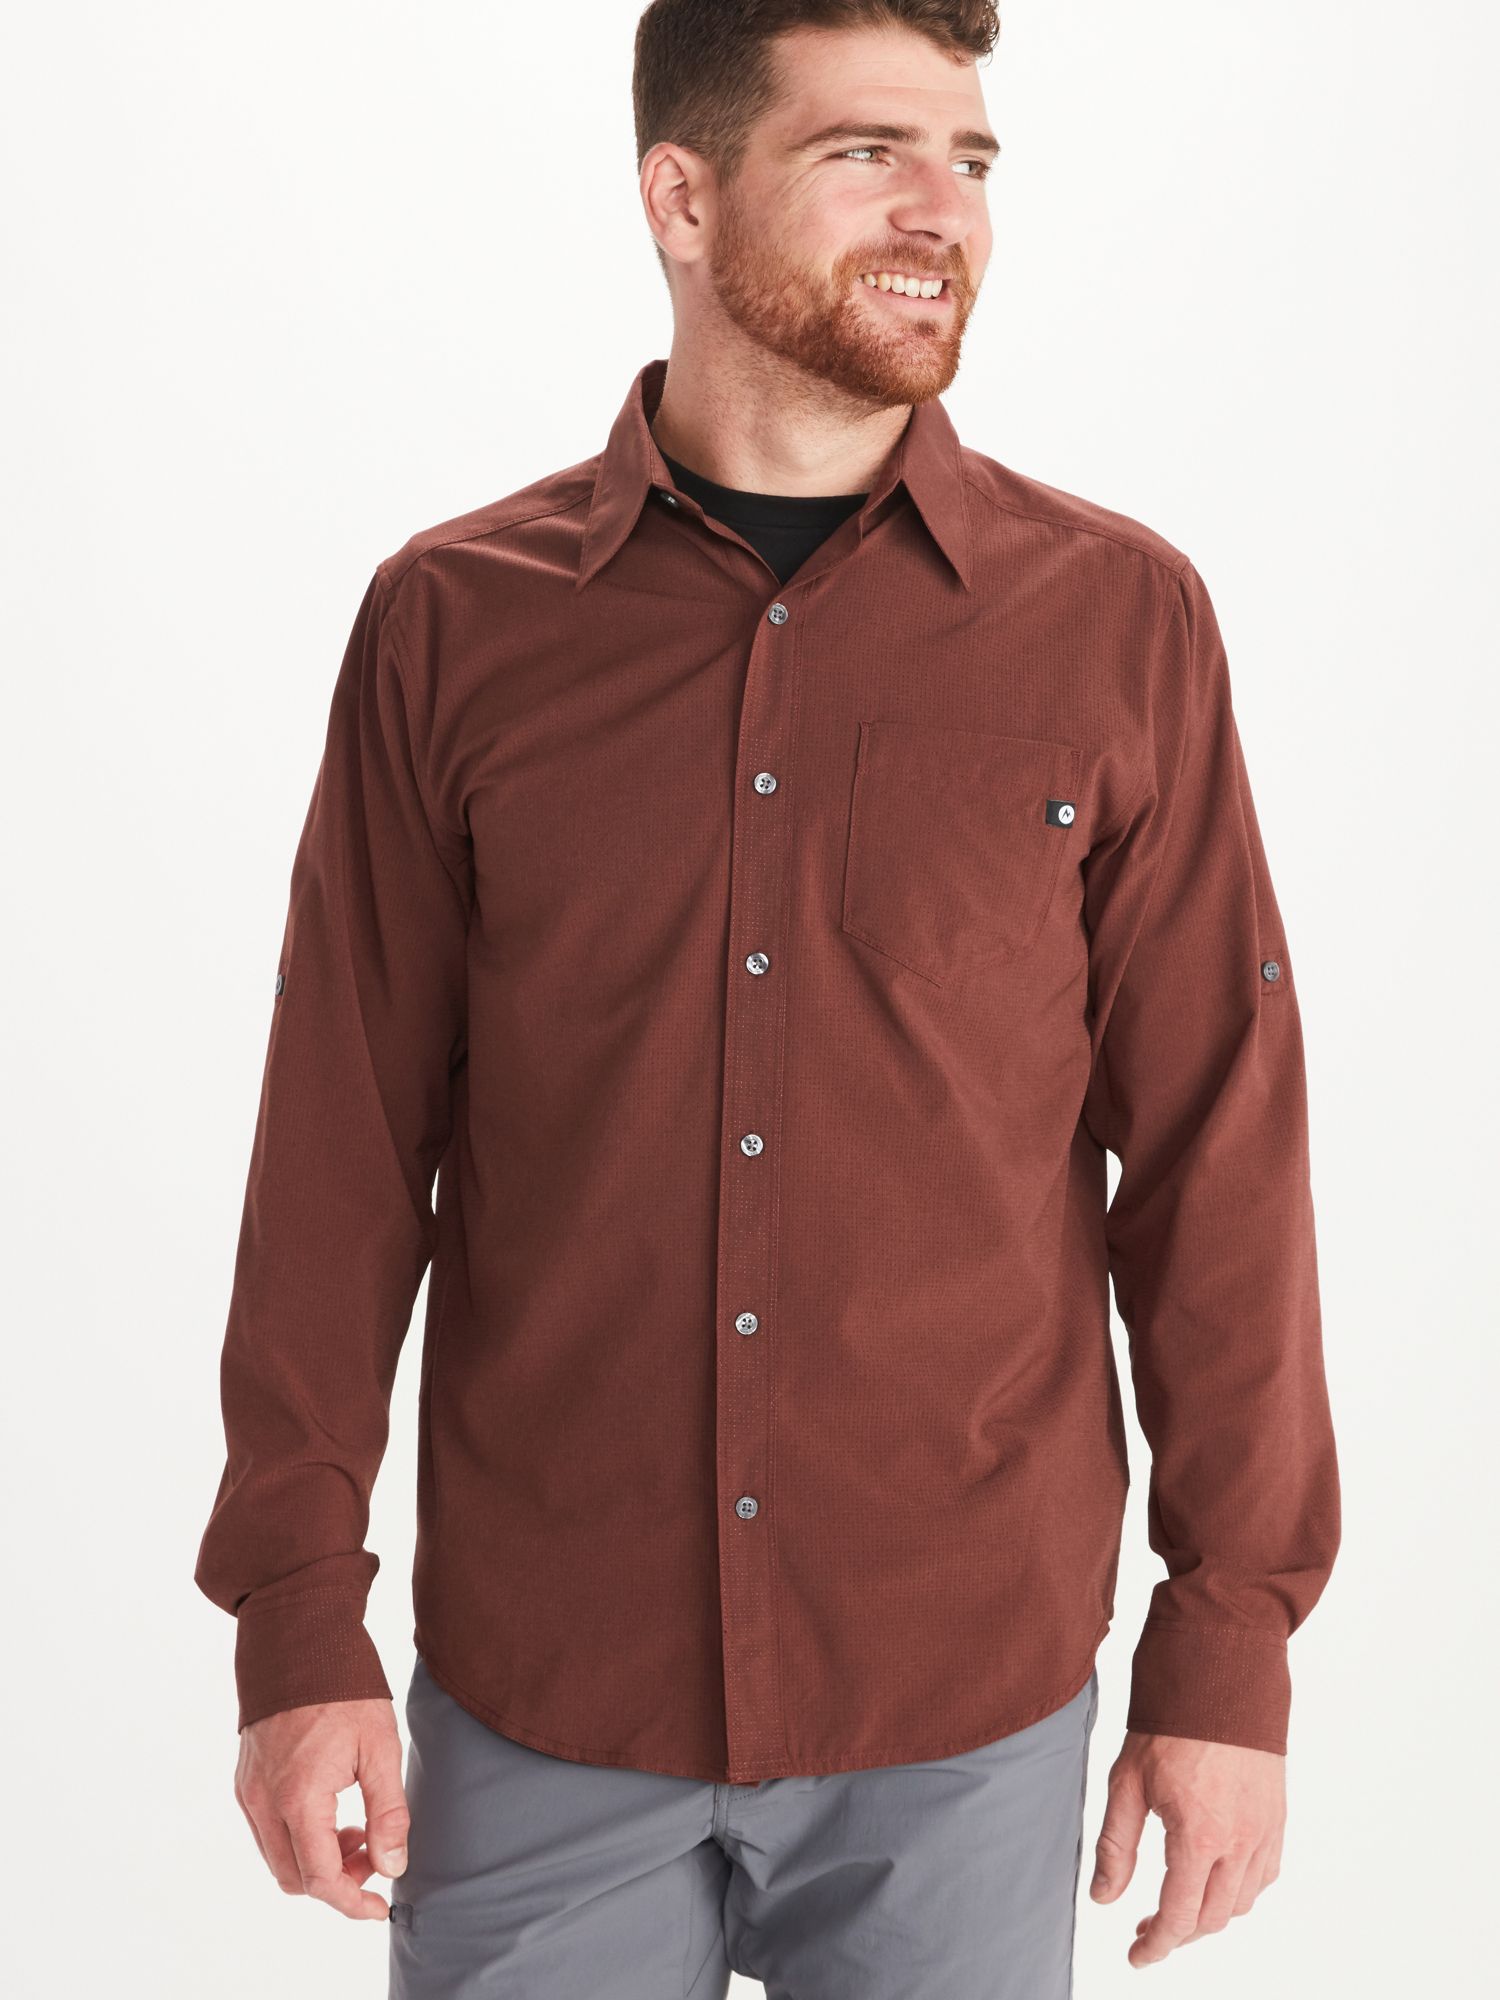 M & L Ben Sherman Men's Long Sleeve Check Shirt RED Sizes